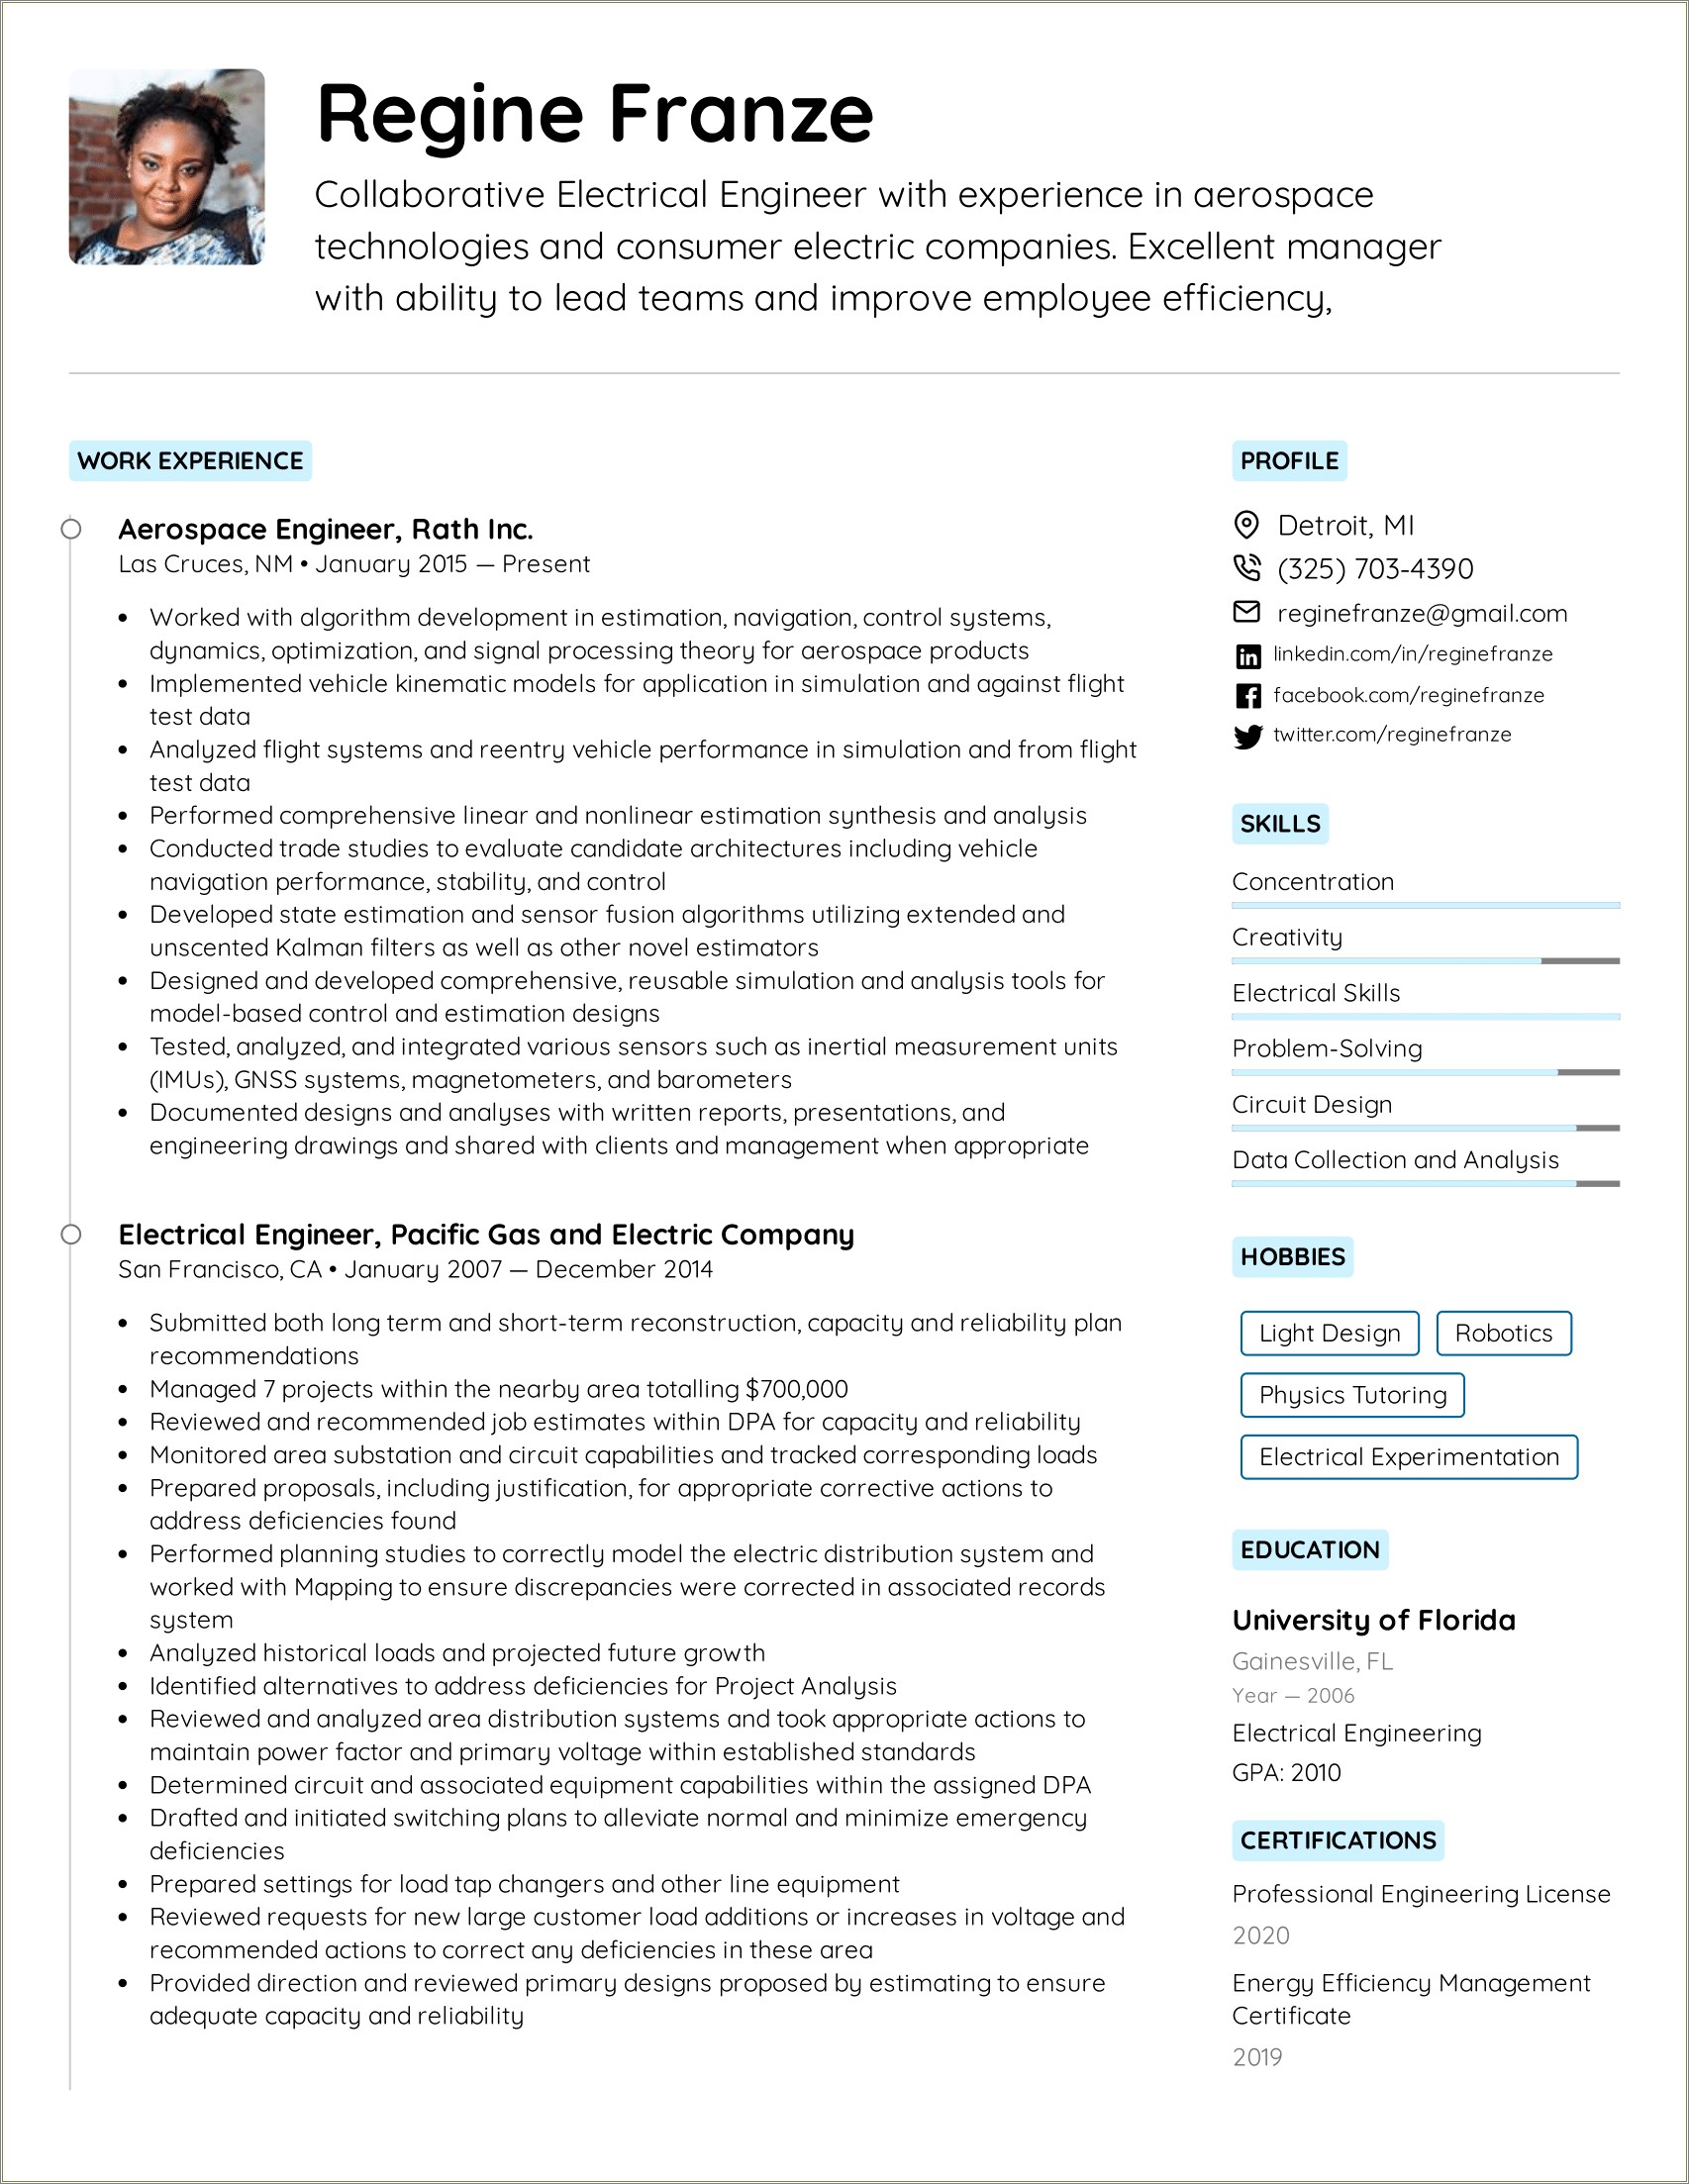 Fusion Analyst Job Description For Resumes